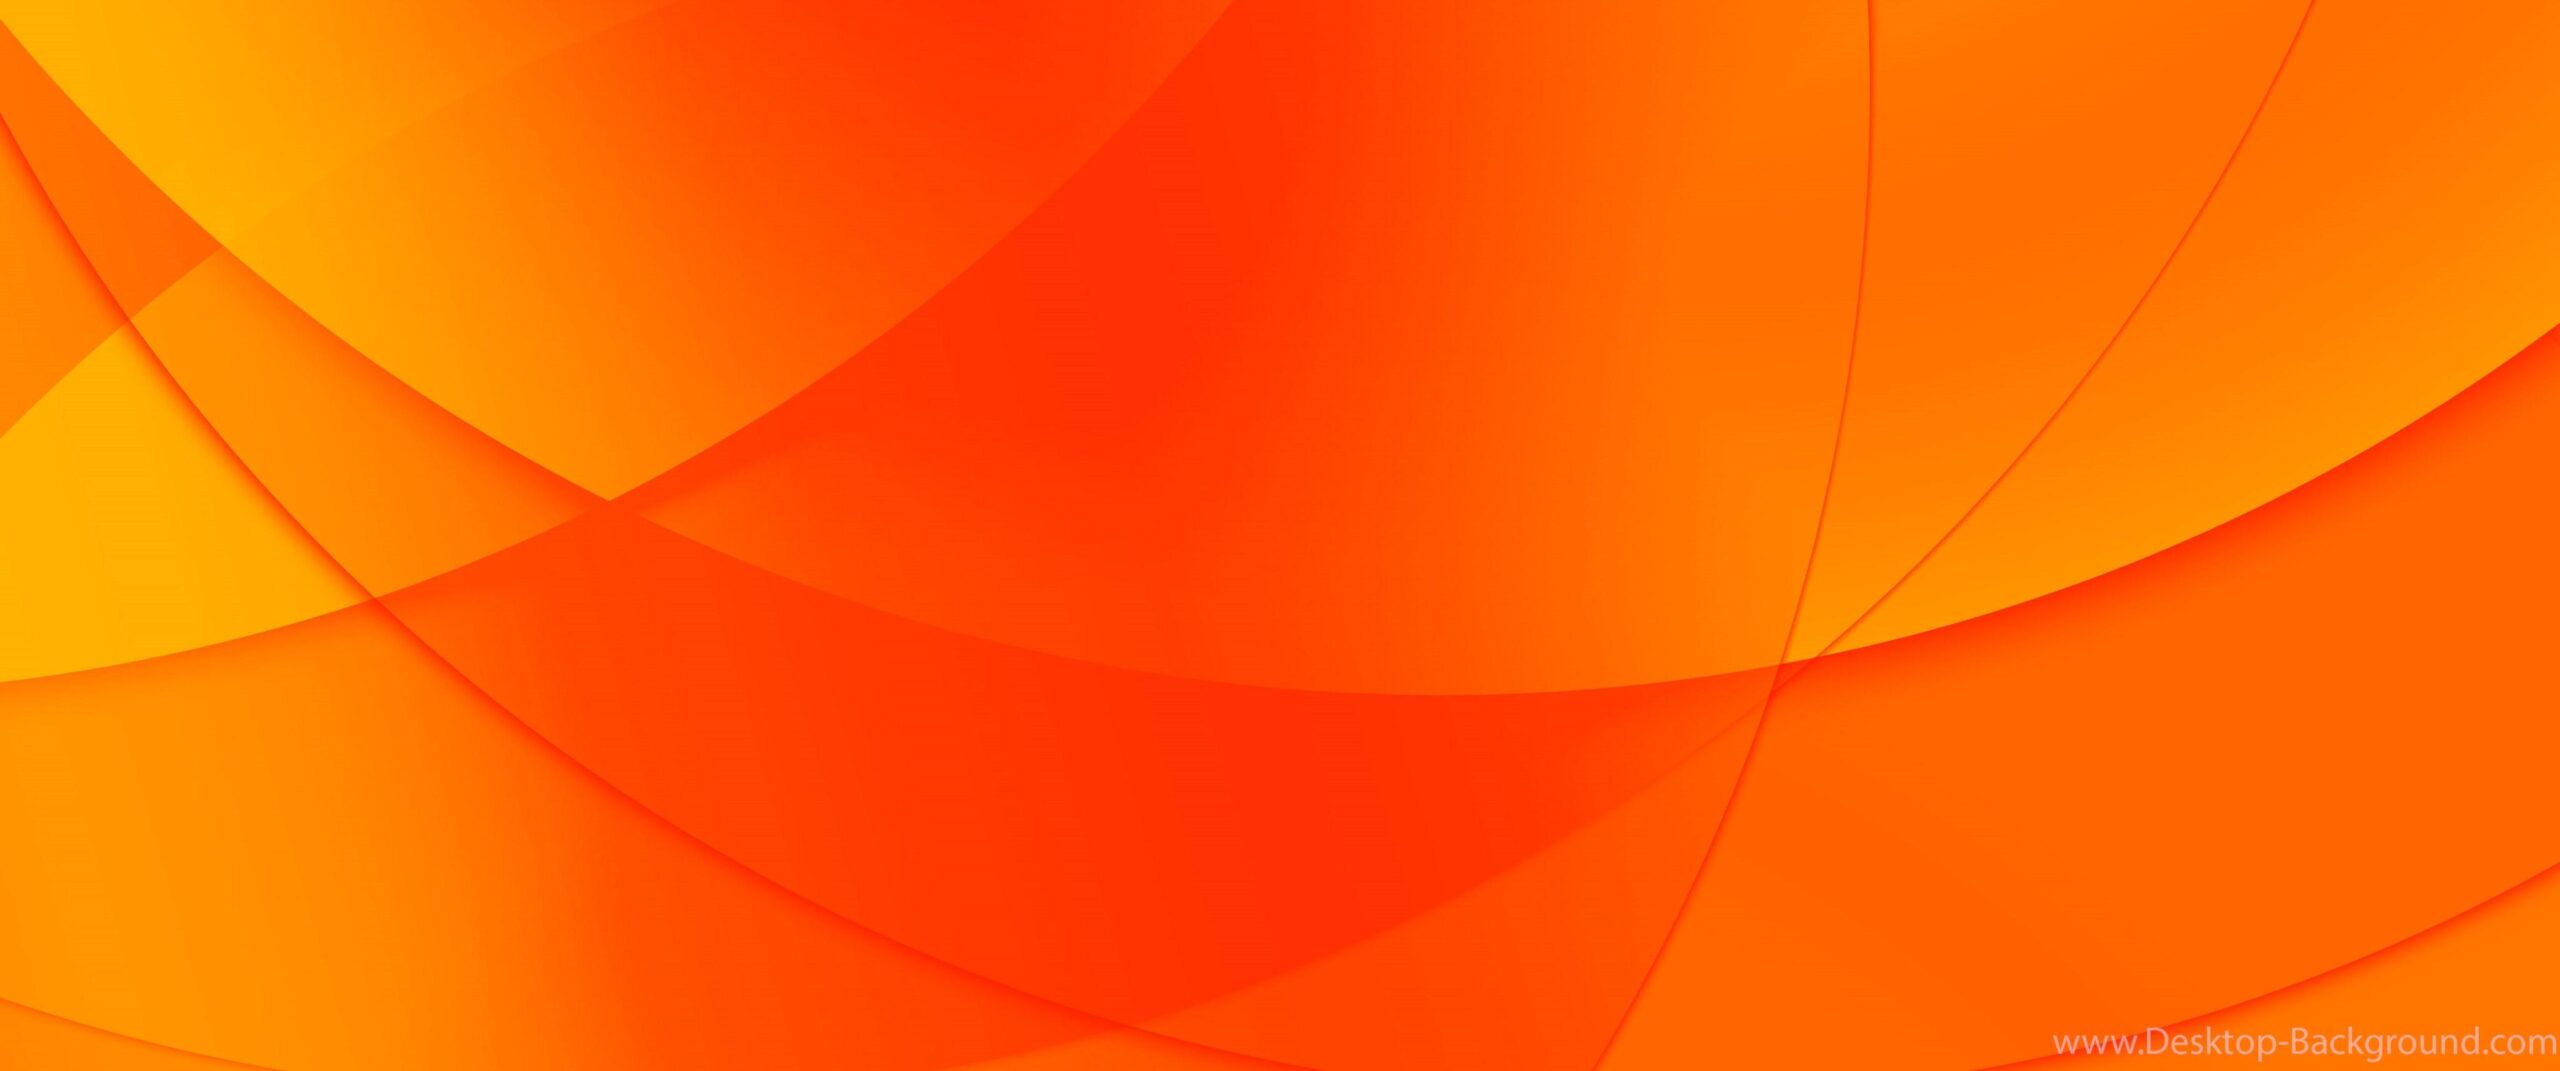 Orange Backgrounds Wallpaper Wallpapers Zone Desk 4K Backgrounds